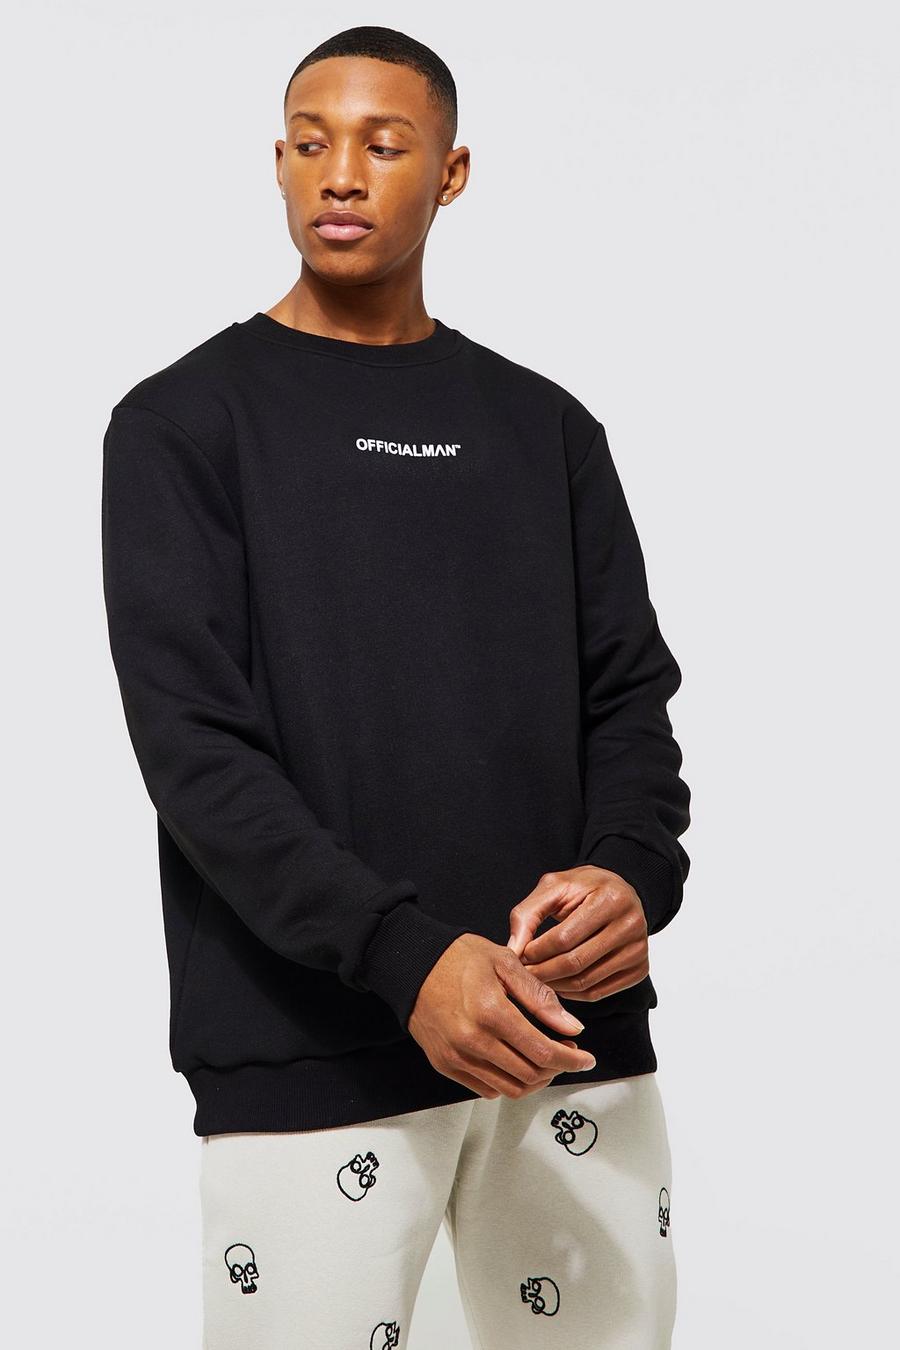 Official Man Crewneck Sweatshirt, Black schwarz